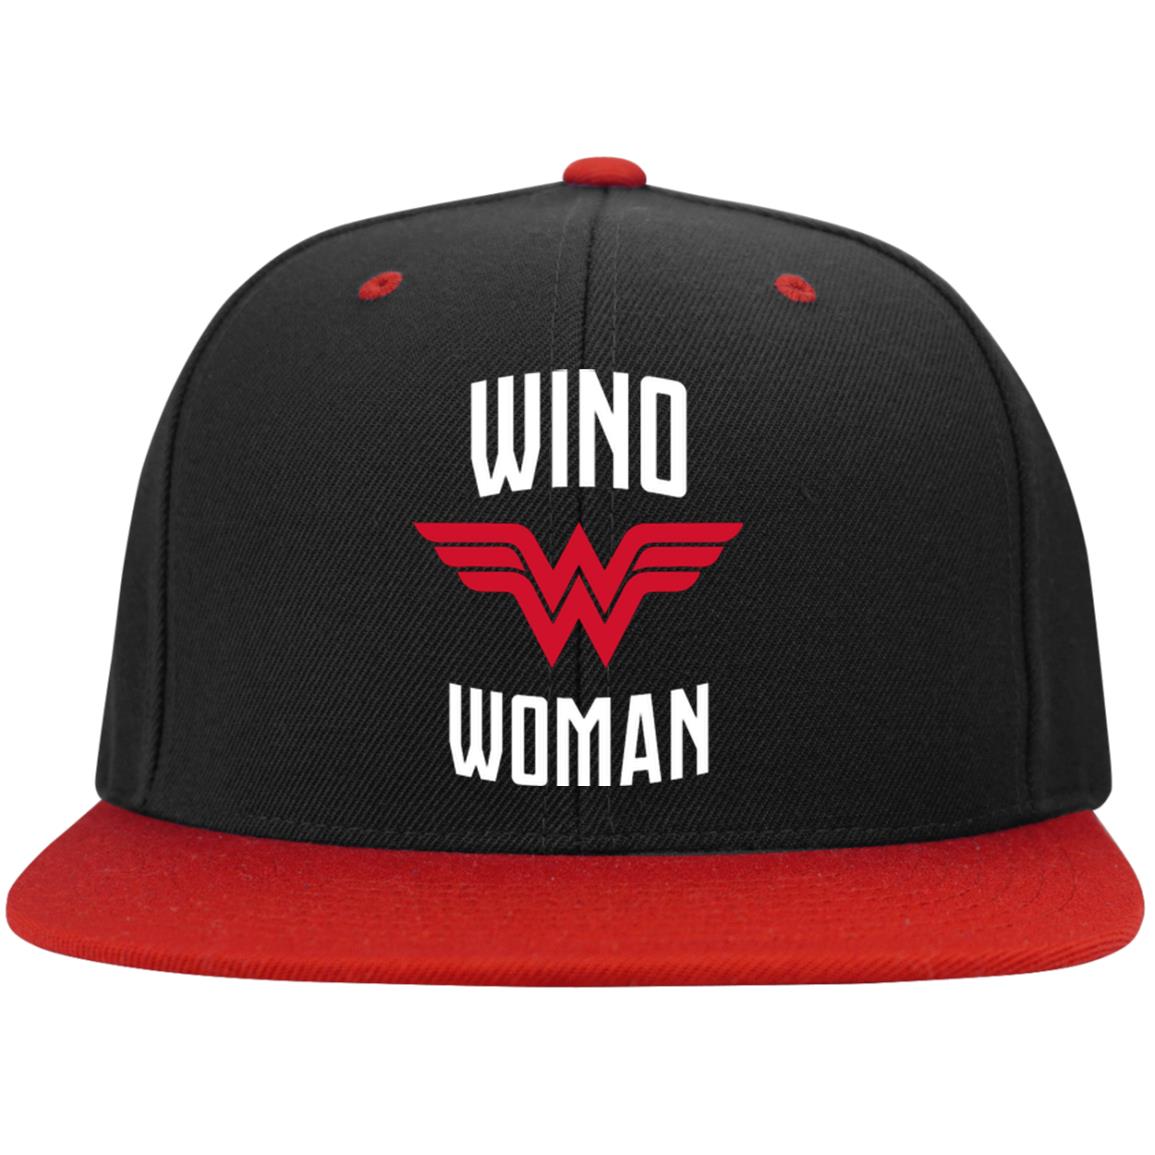 Wino Woman - Snapback Hat